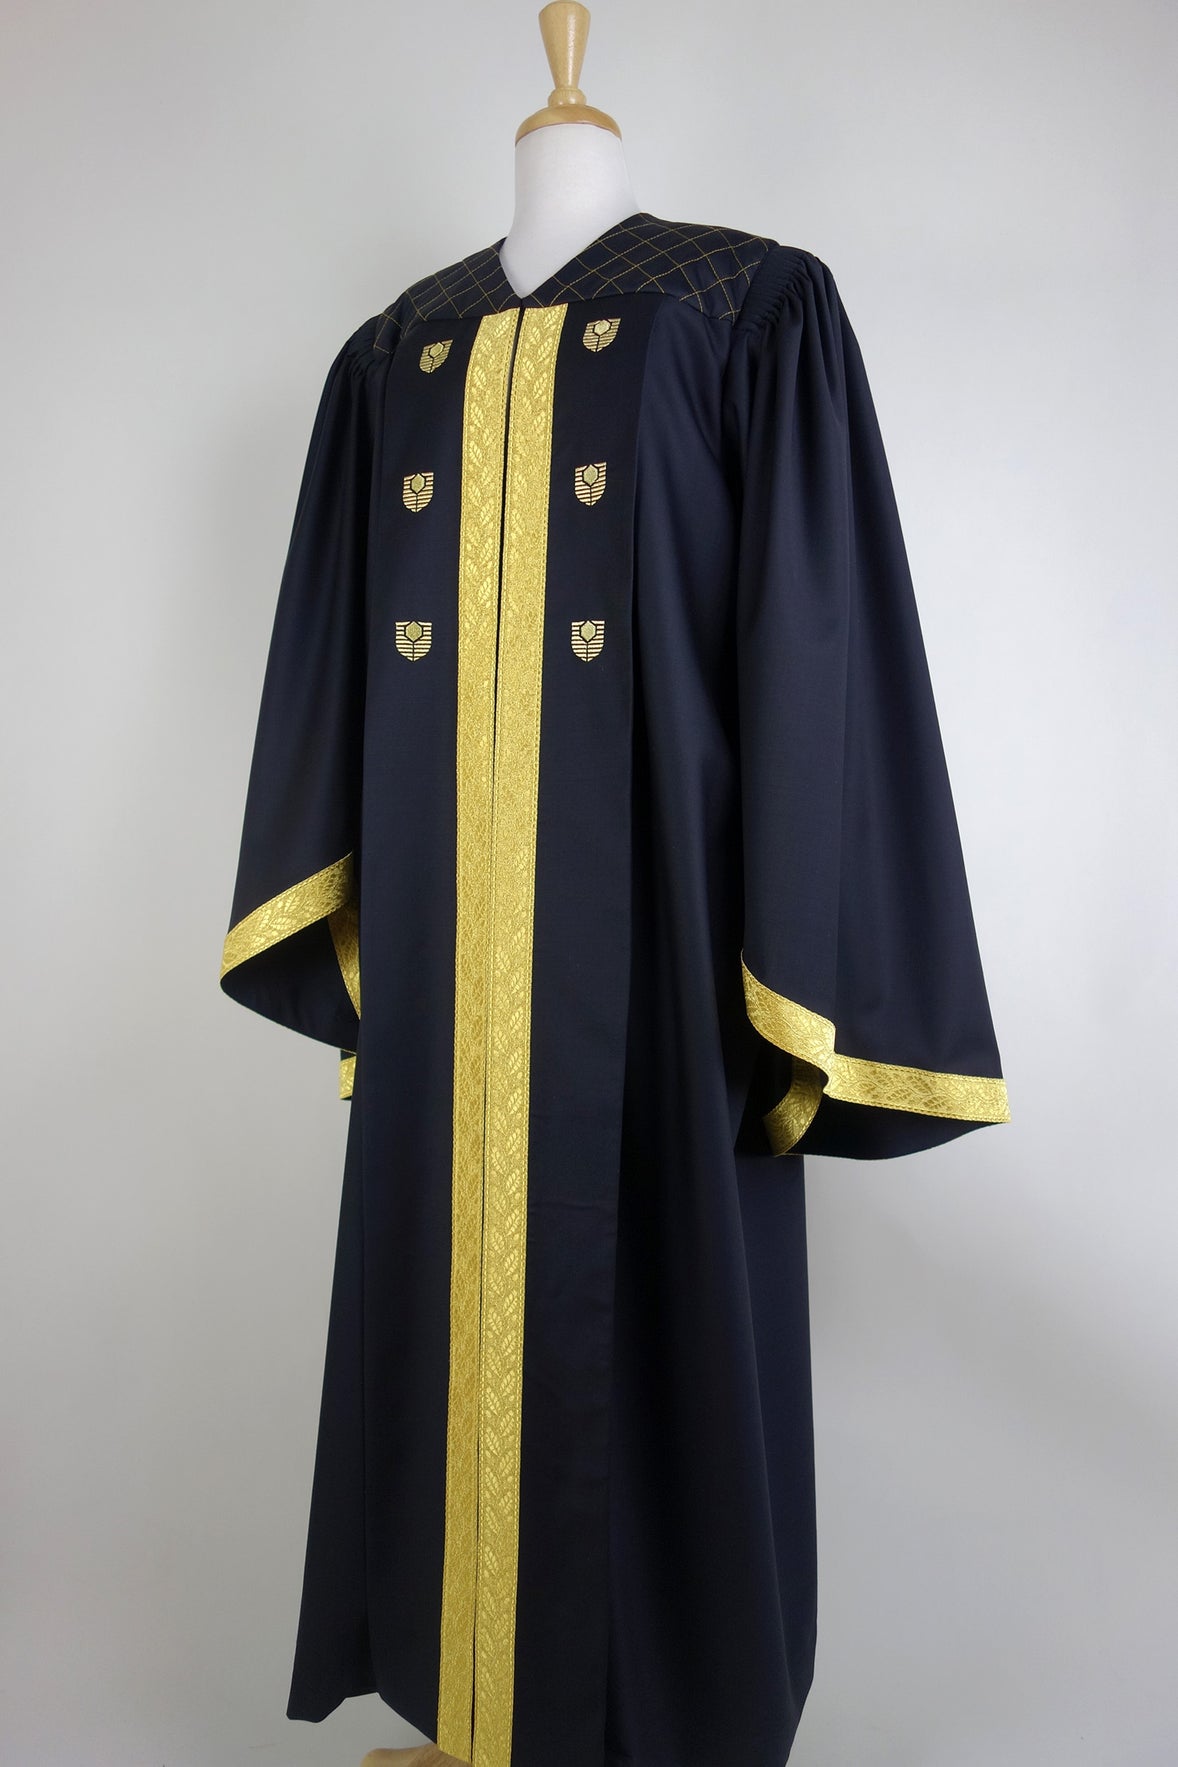 Council Robes